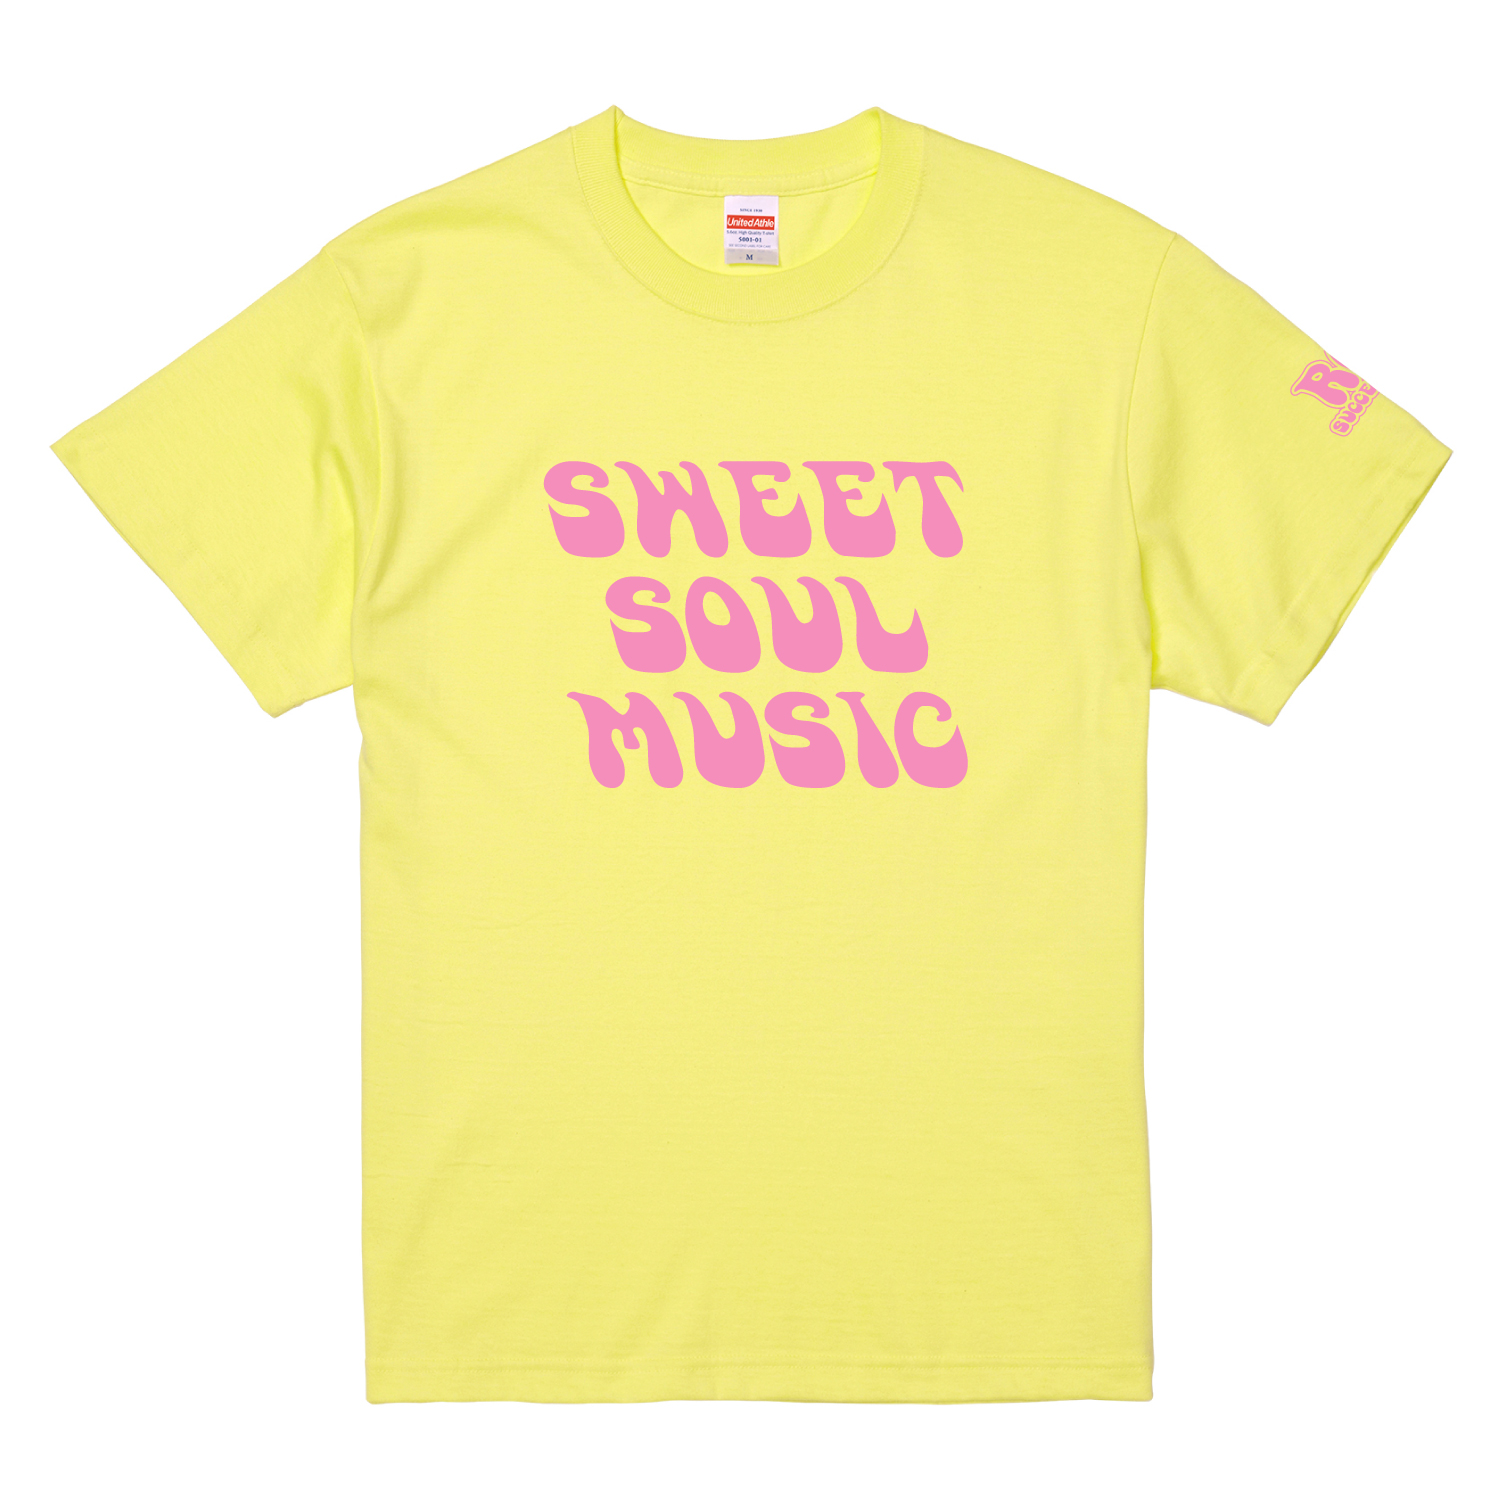 SWEET SOUL MUSIC Tシャツ(イエロー)